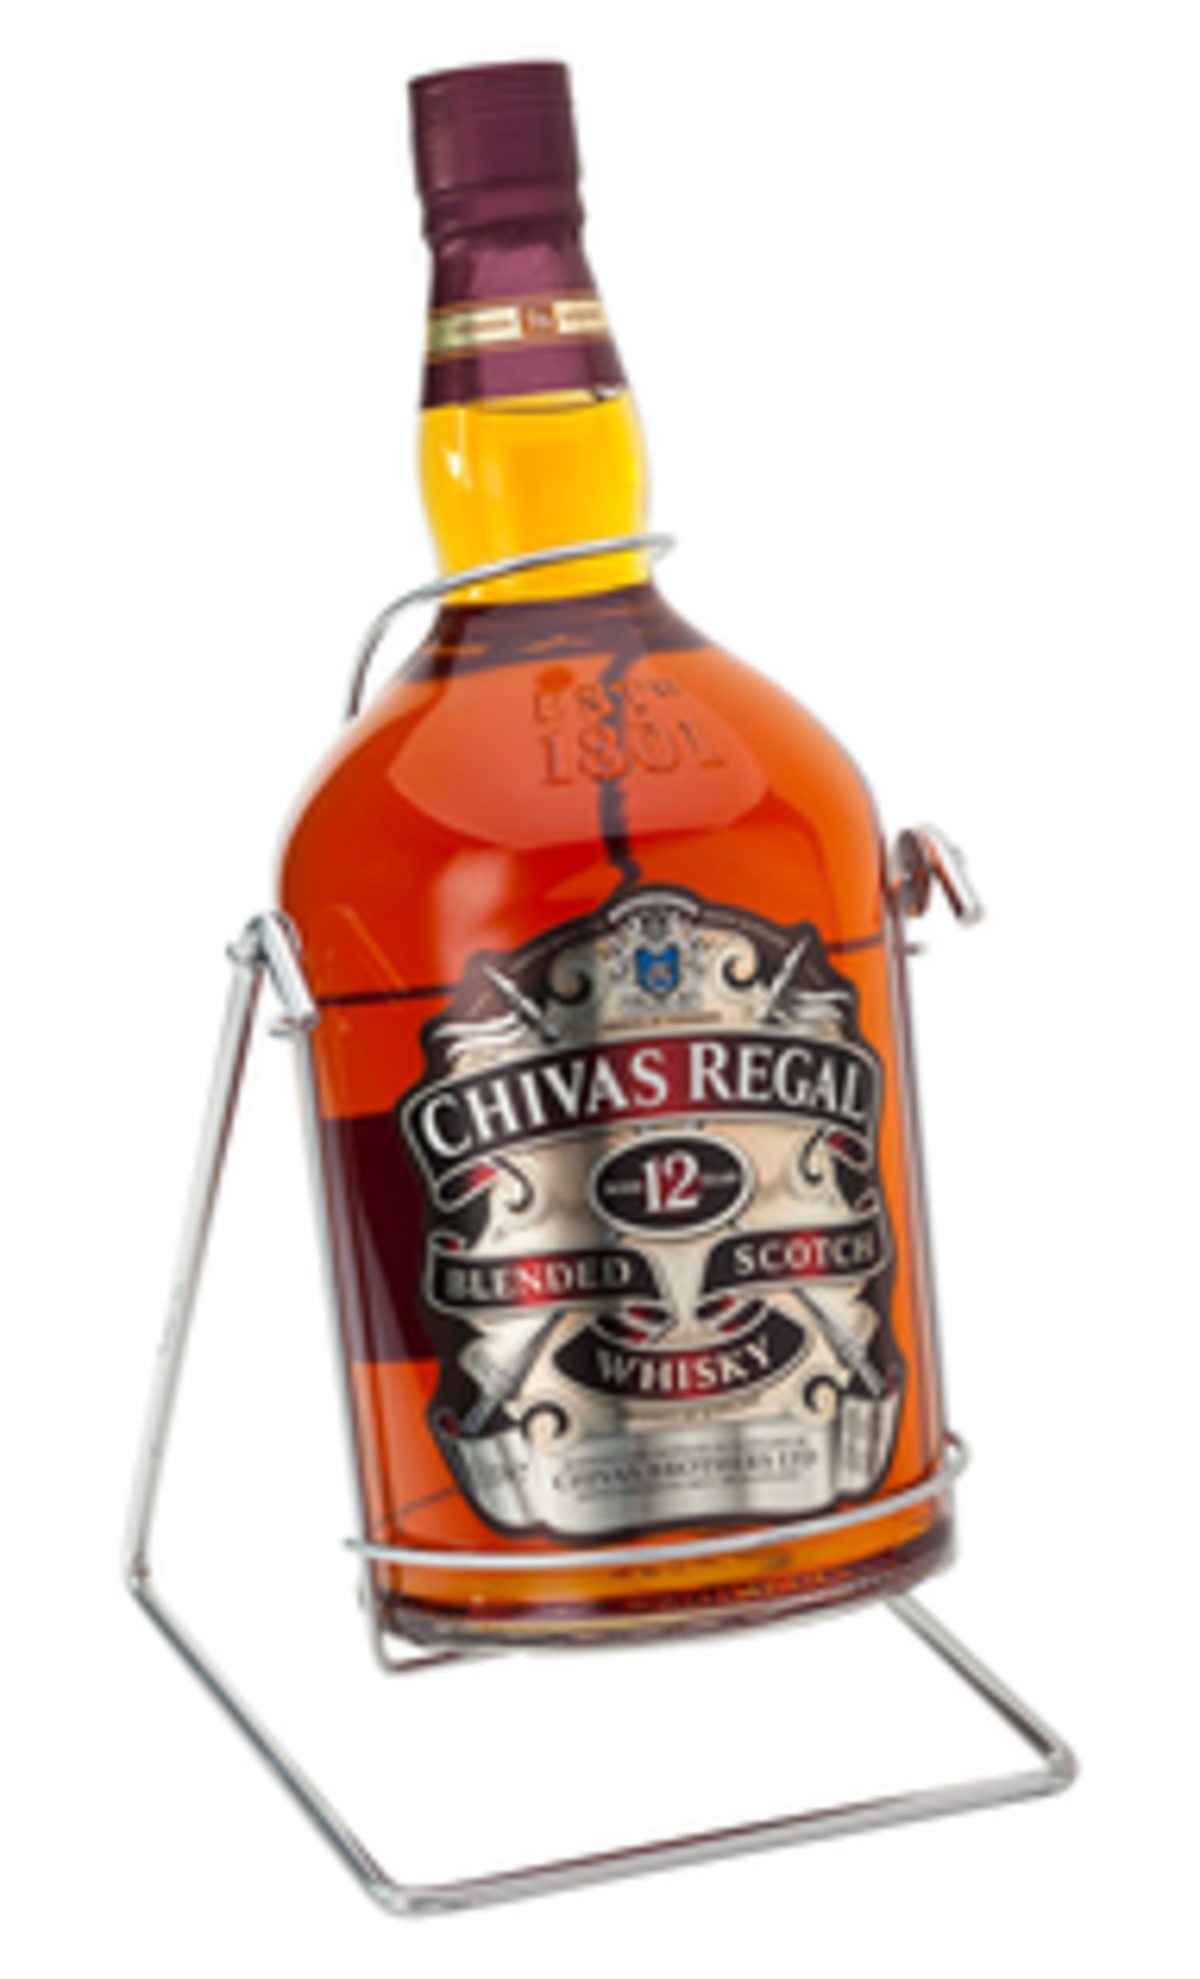 Chivas Regal 12 4,5л. Chivas Regal 4.5l. Виски Чивас Ригал качели 4.5 литра. Чивас Ригал 12 качели 4.5. Бутылка виски 5 литров